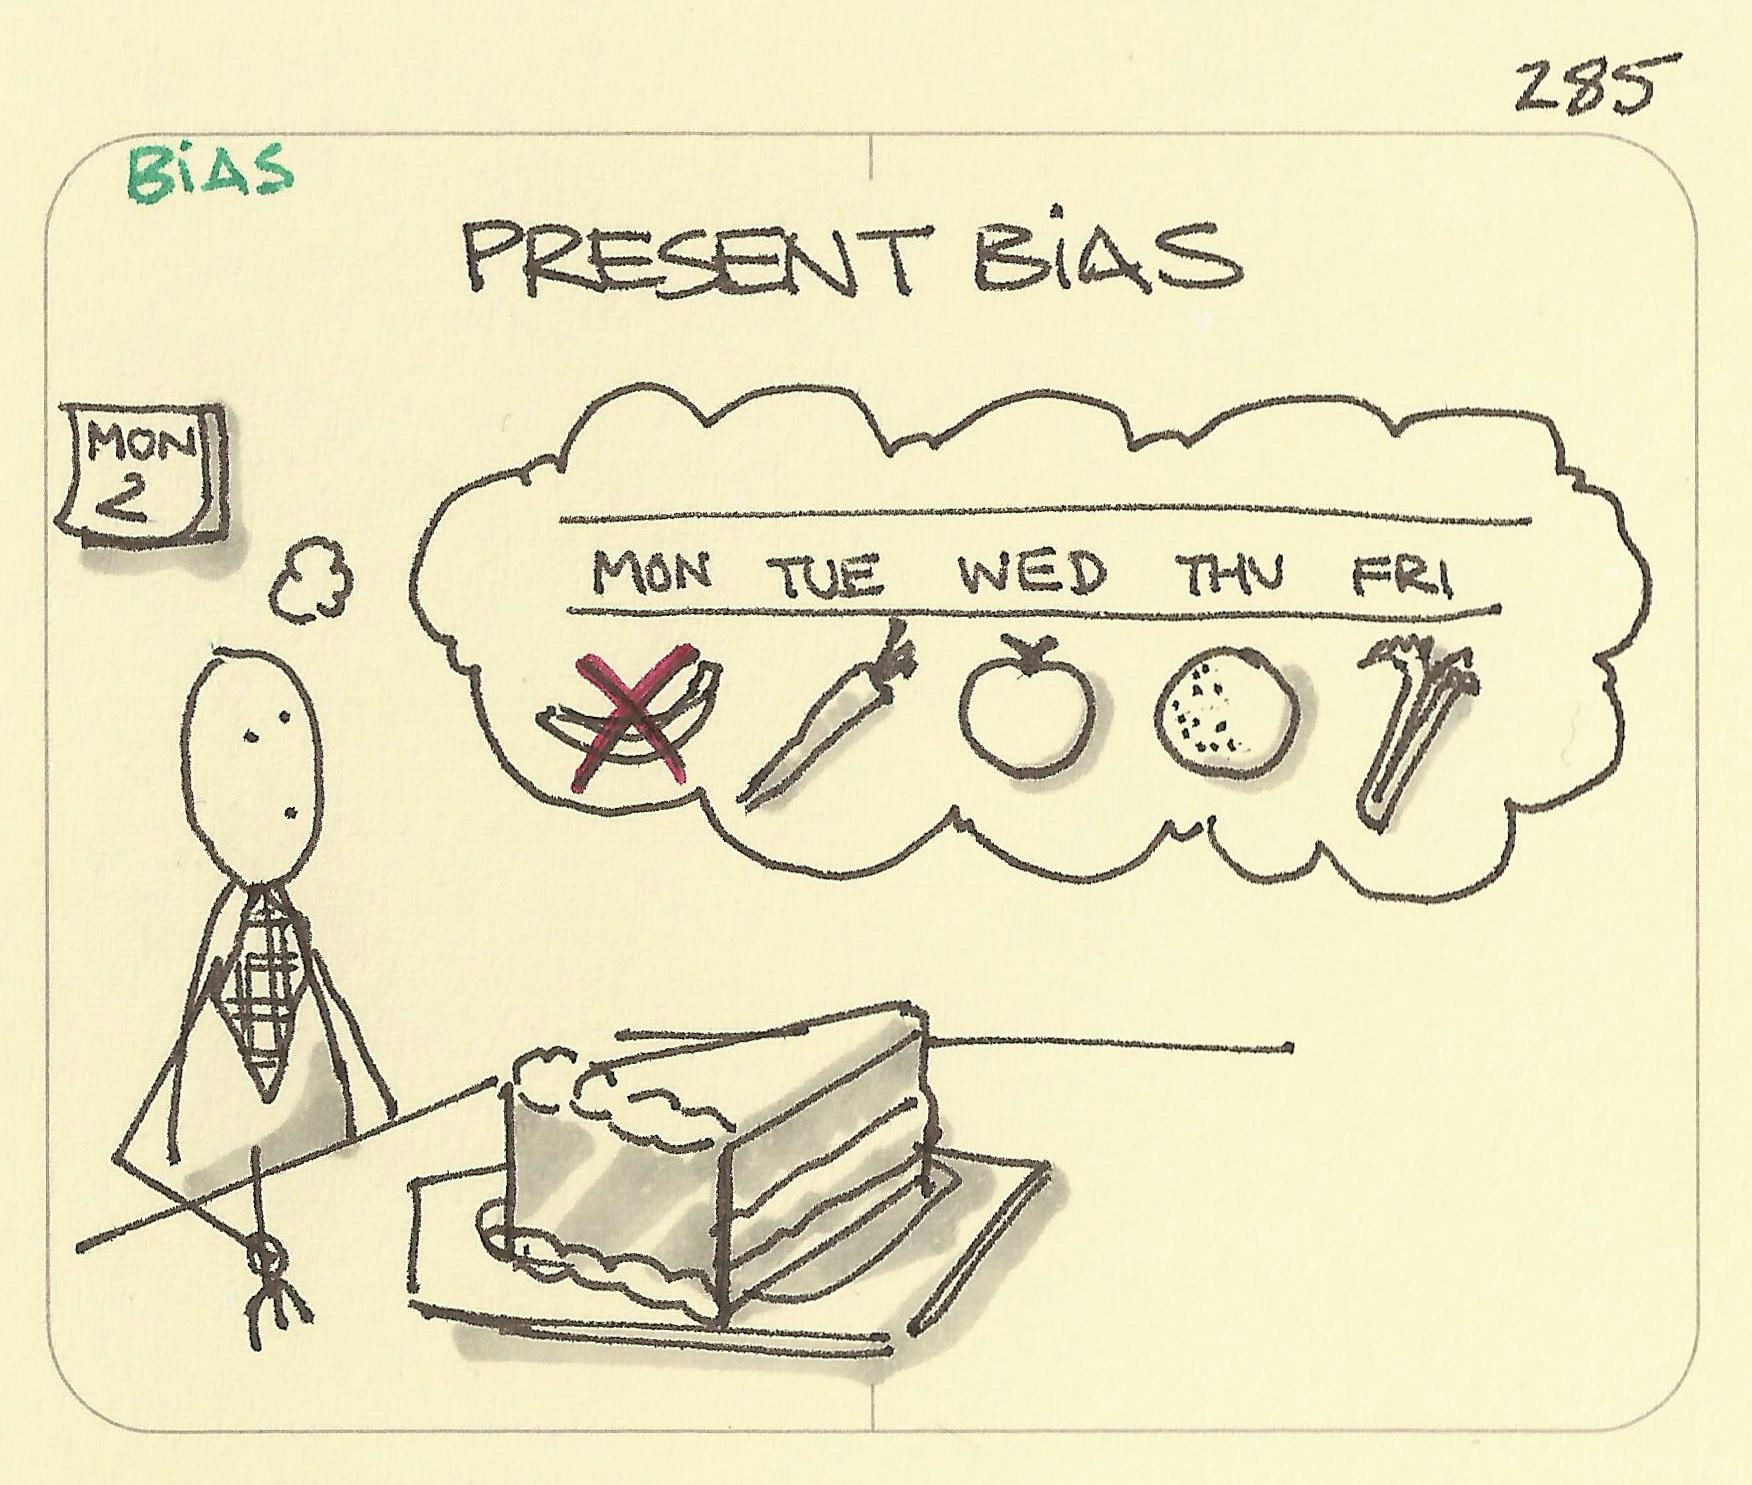 Present bias - Sketchplanations